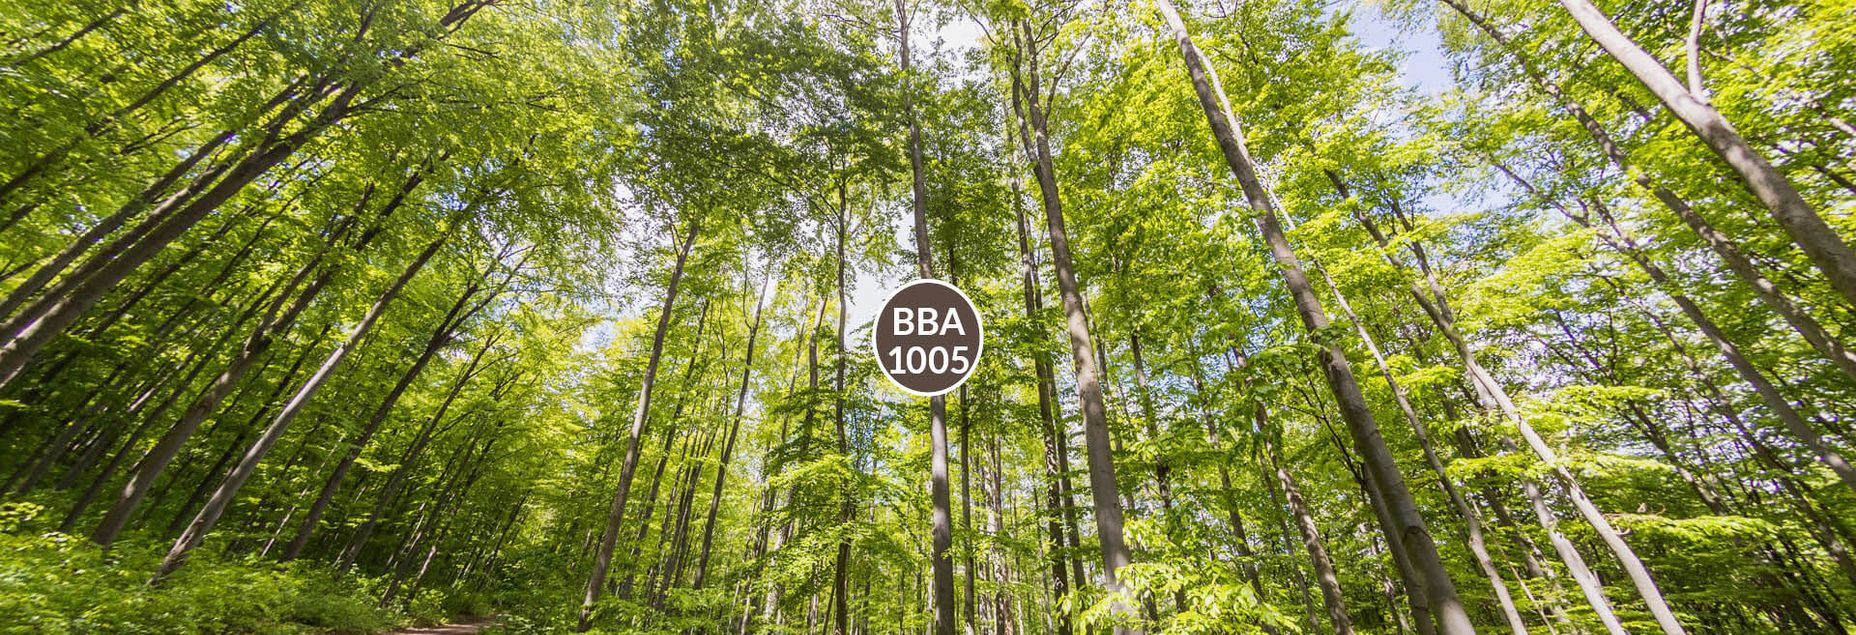 Baum BBA 1005 - Fisheyeperspektive